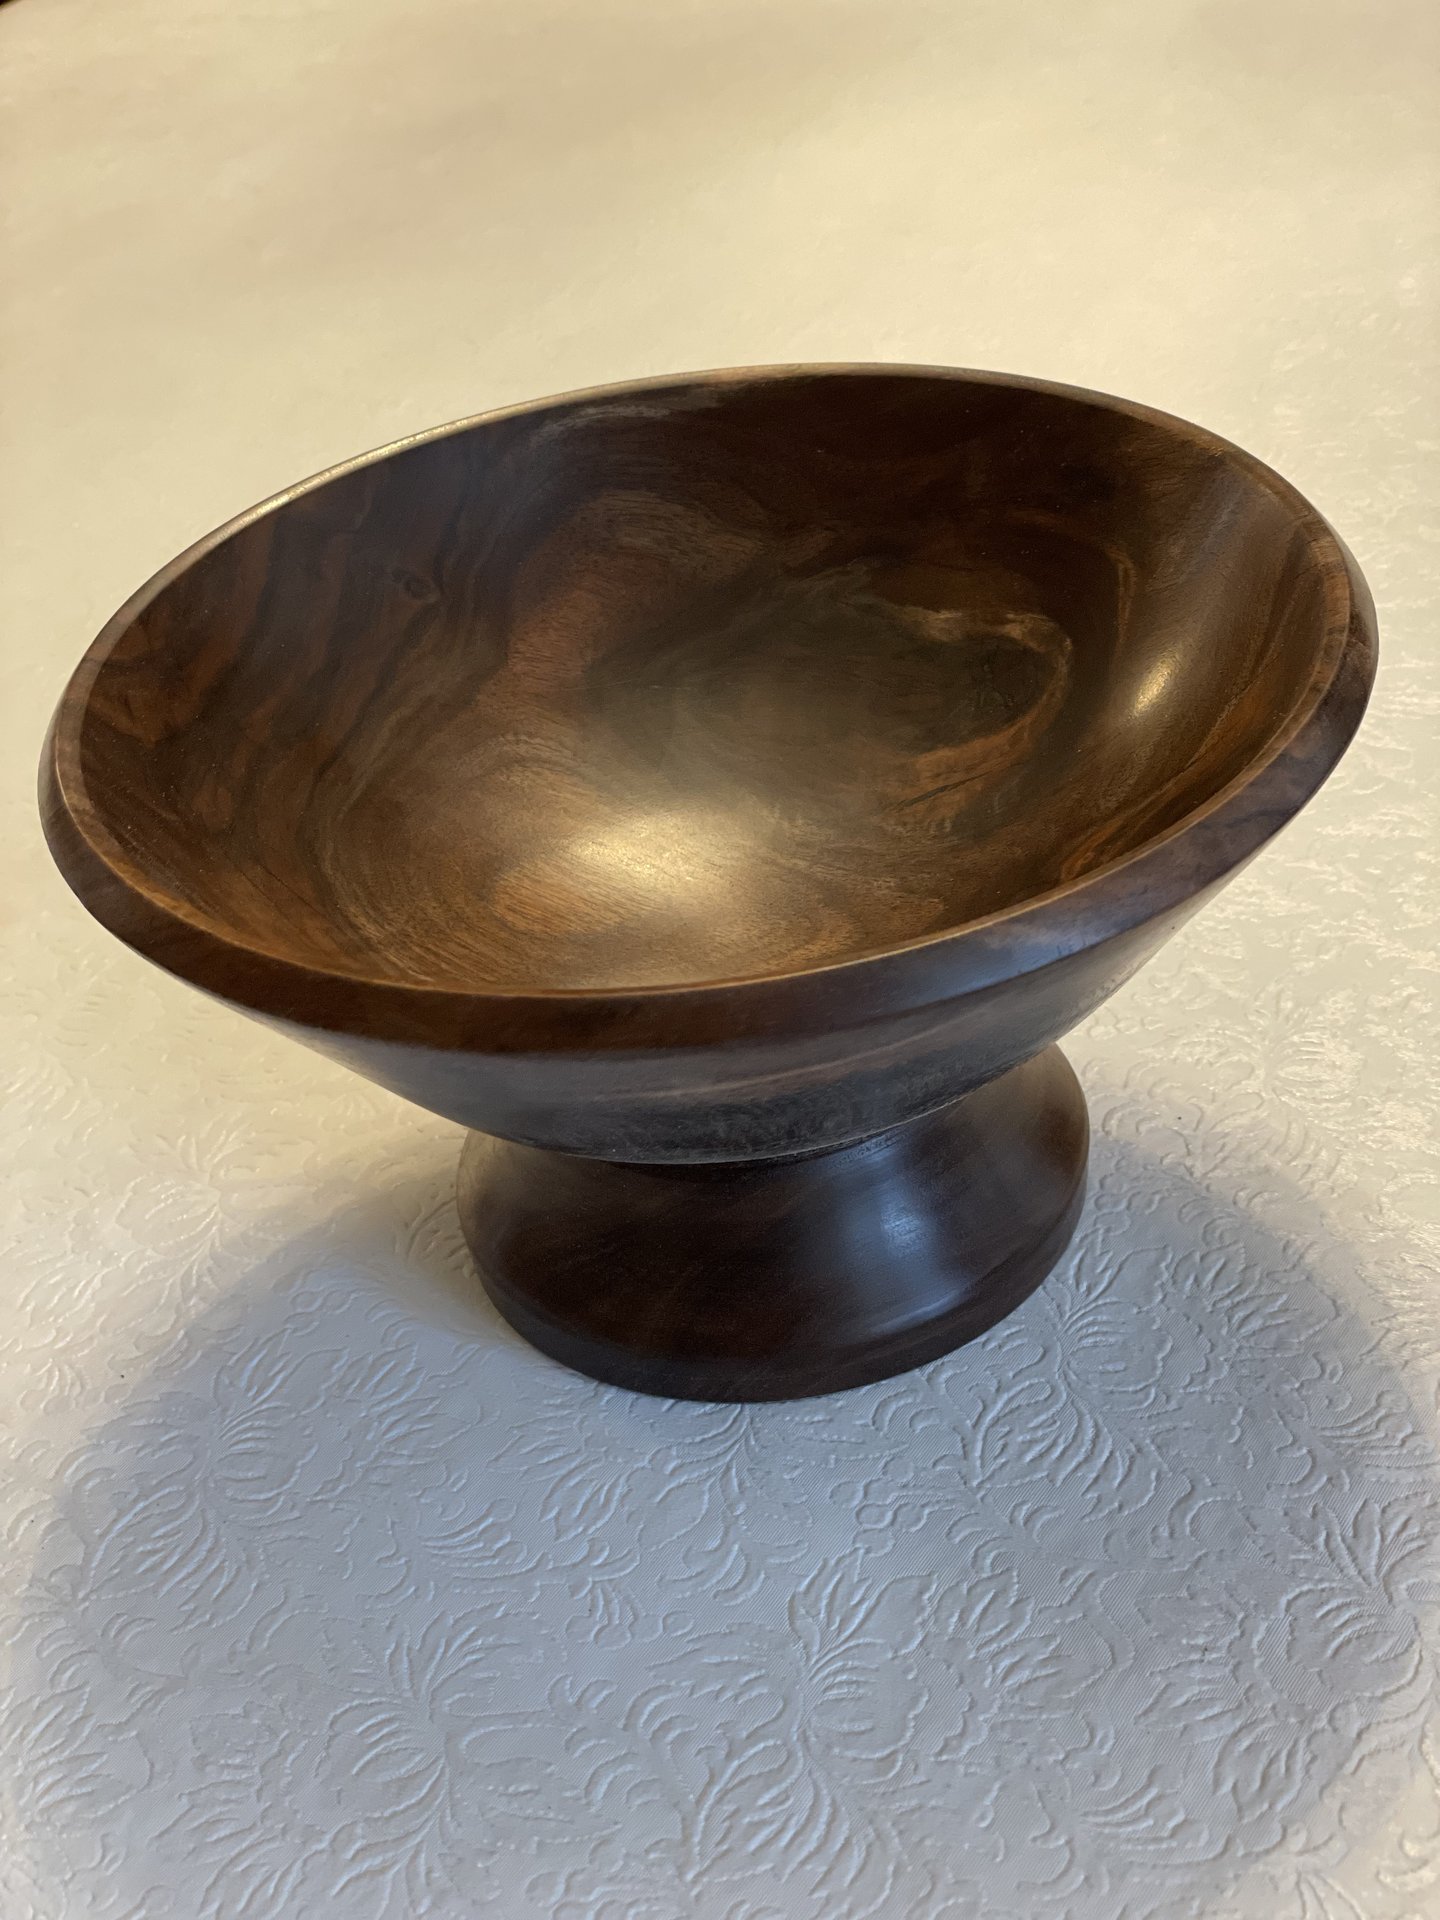 Black walnut pedestal bowl.